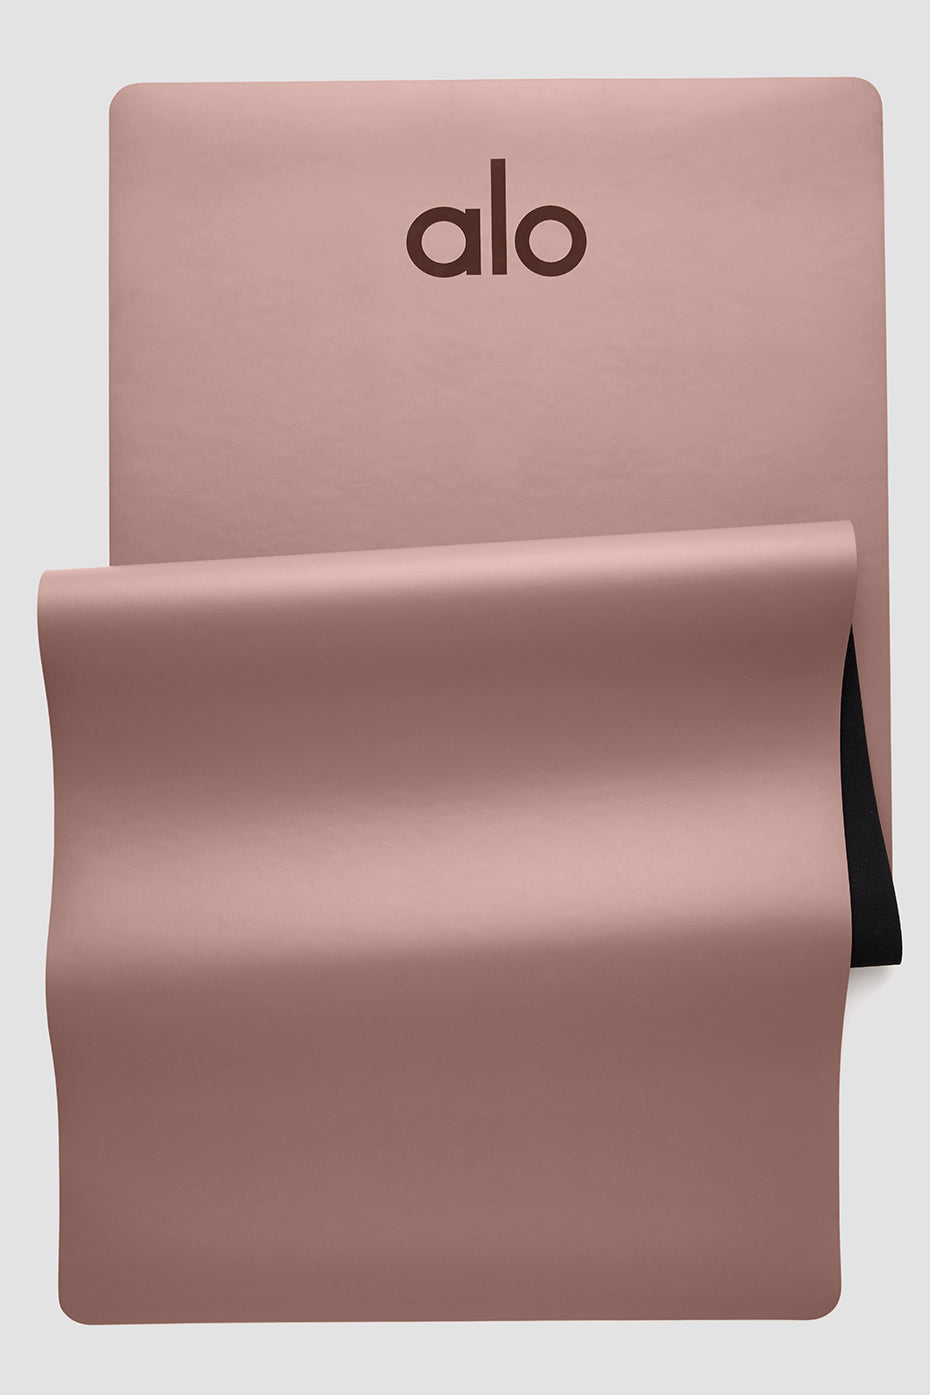 Alo Yoga Warrior Mat - Powder Pink color, Sports Equipment